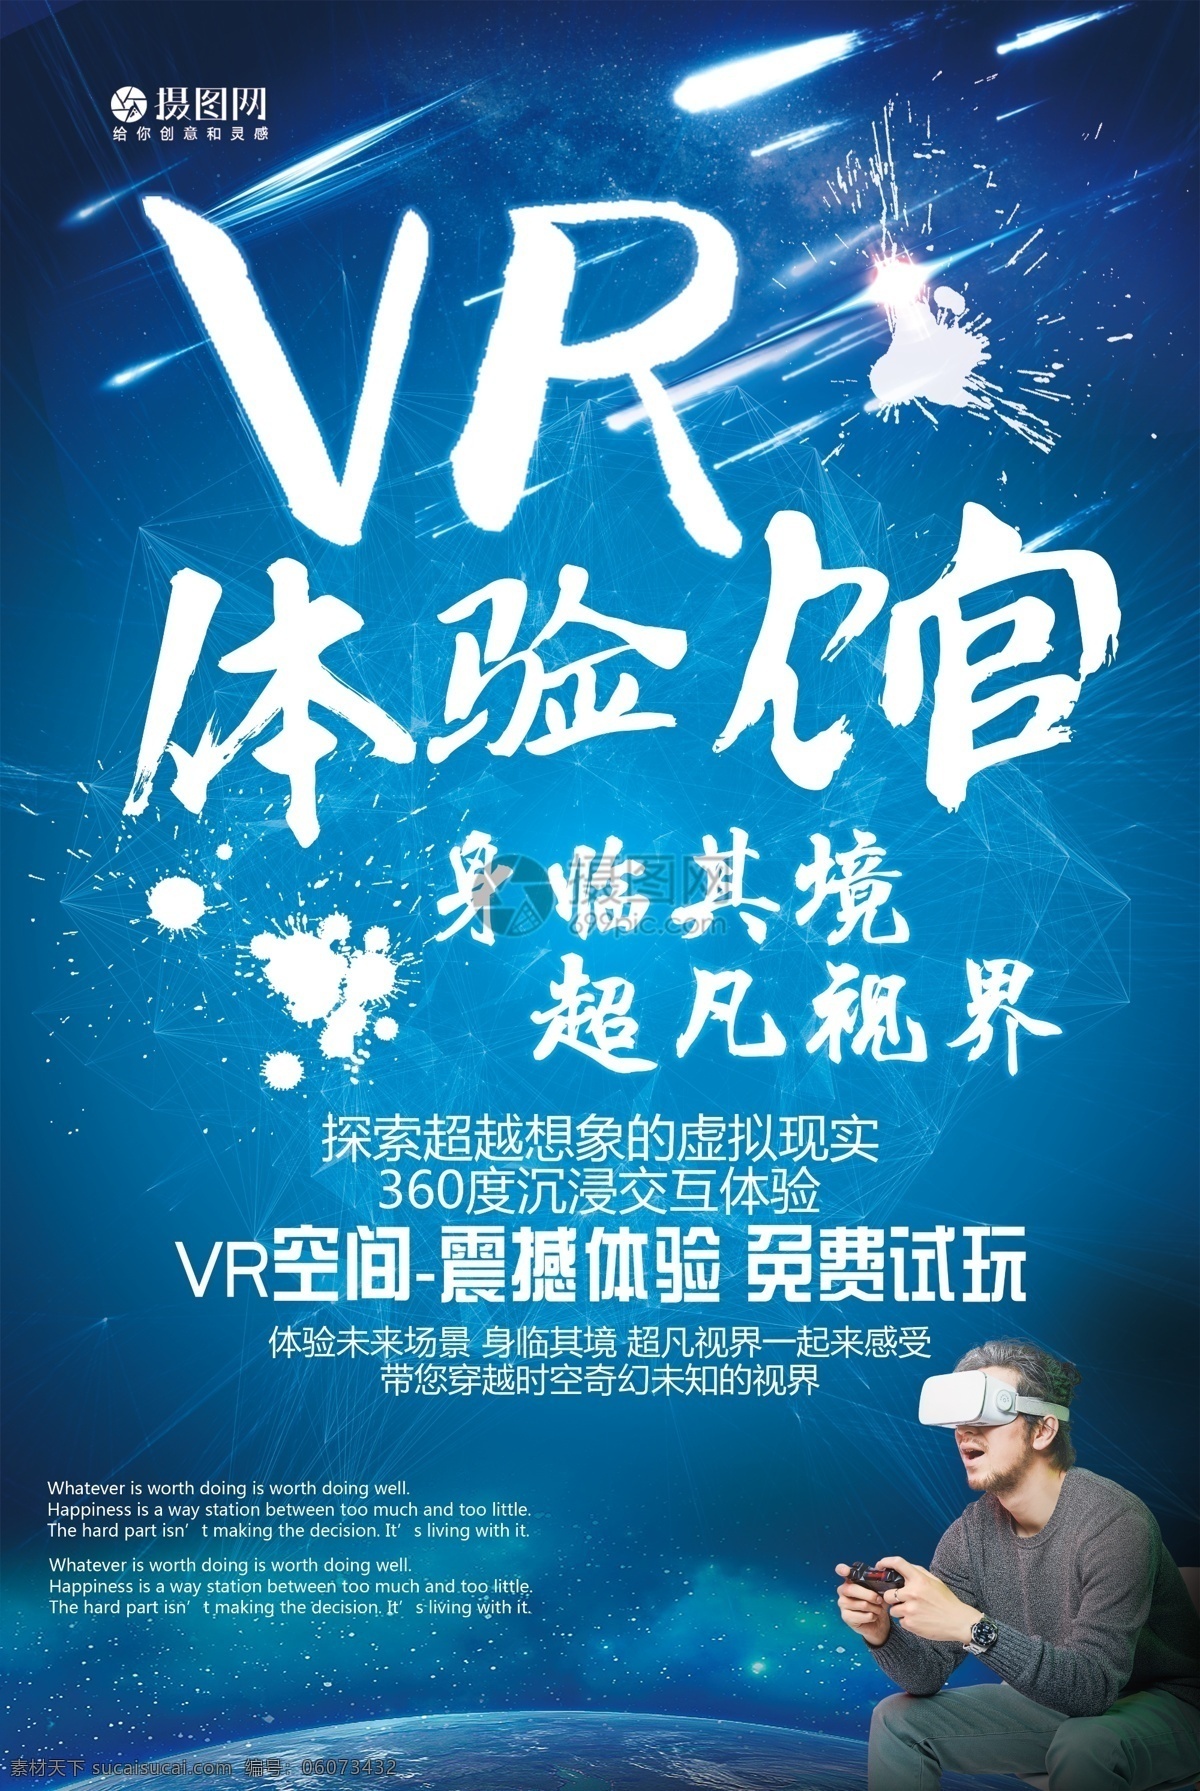 vr 体验 馆 身临其境 超凡 视界 海报 3d 科技 视频 未来 全景 智能 头盔 引领 控制